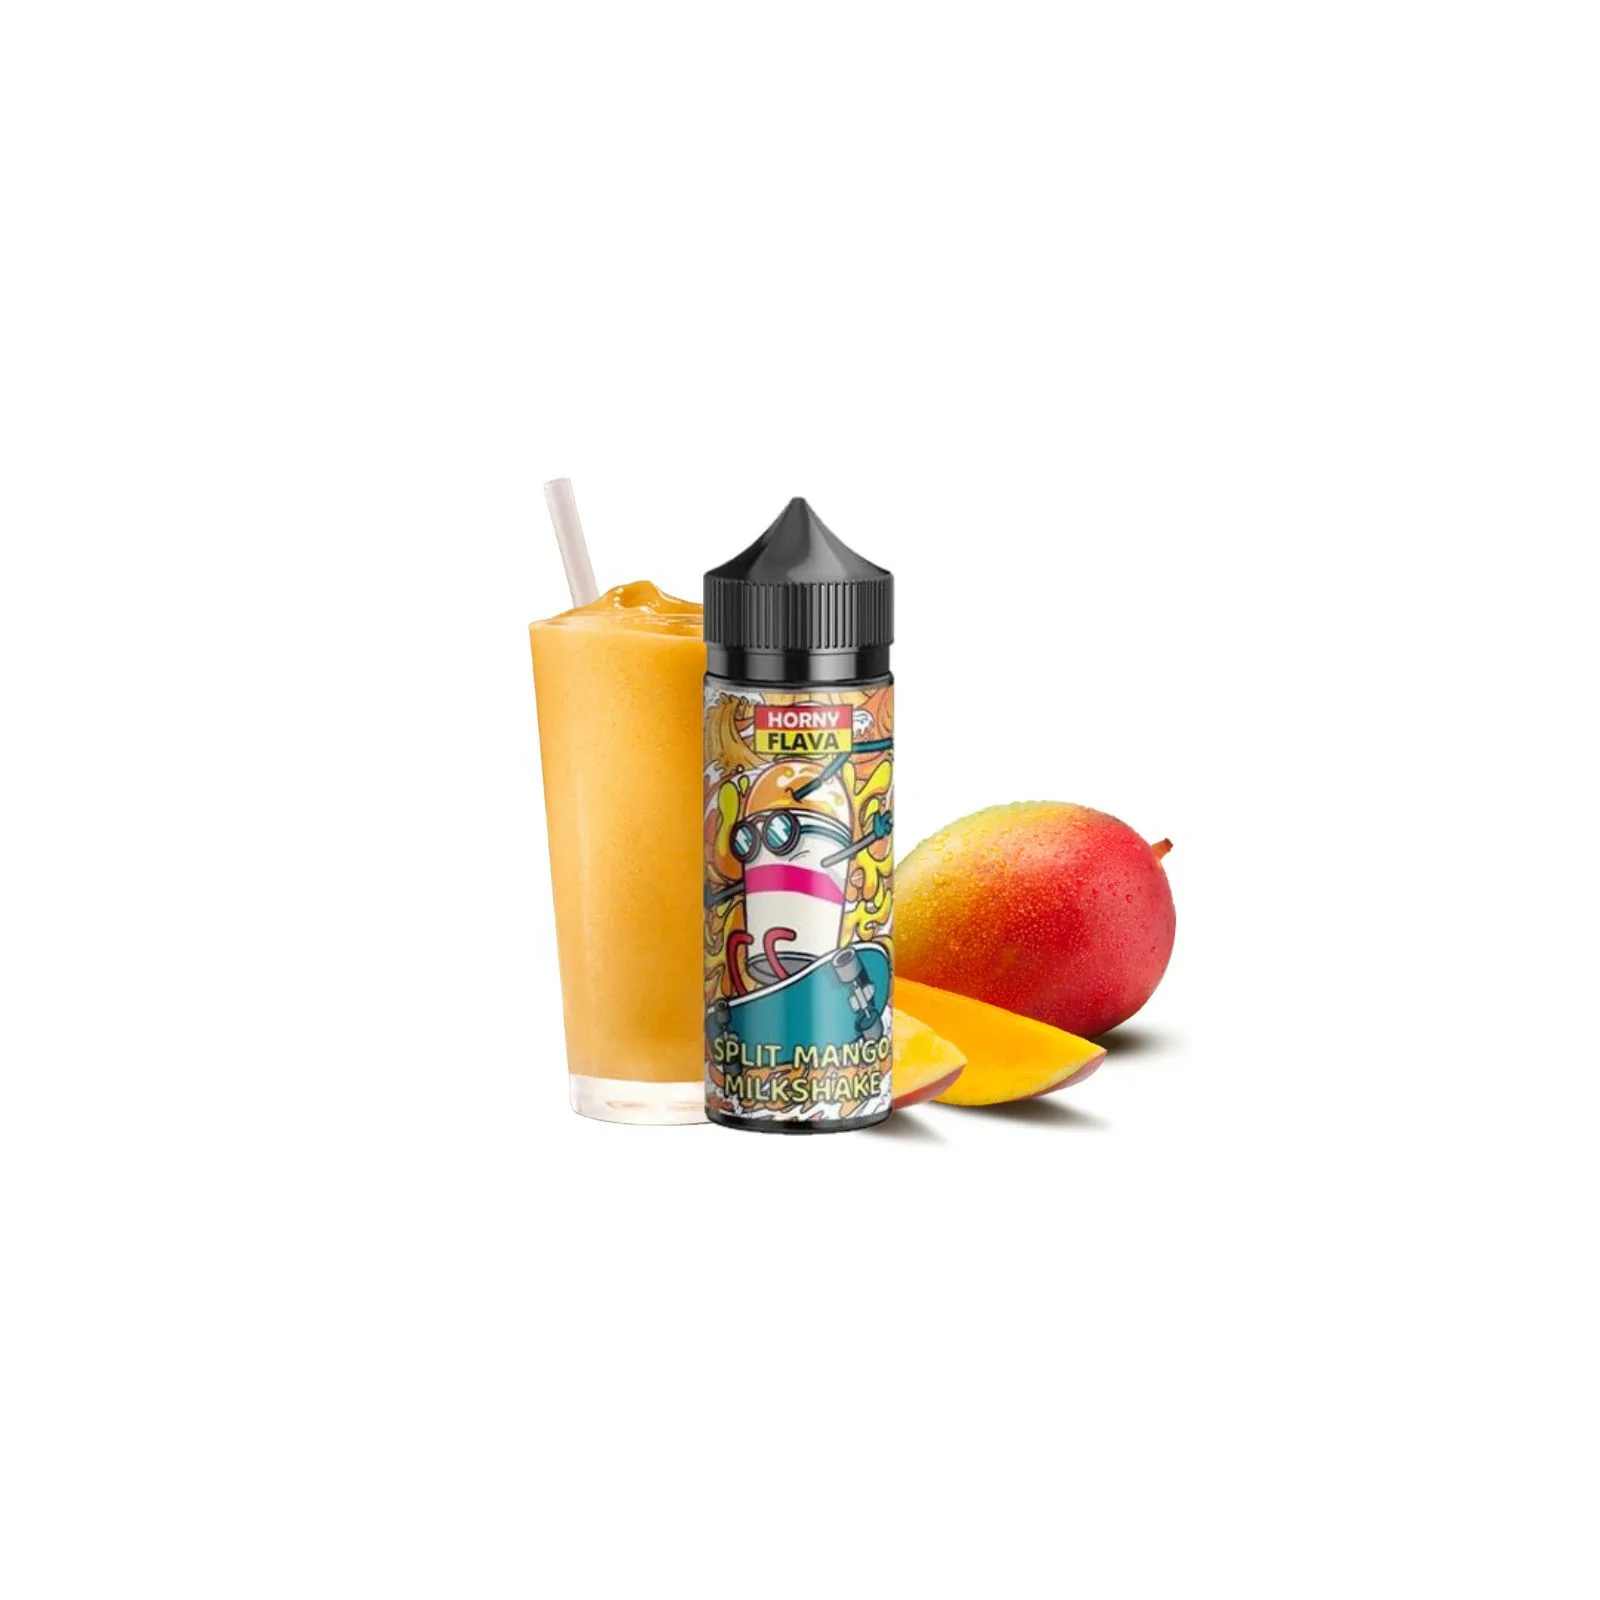 Split Mango Milkshake 100ml - Horny Flava